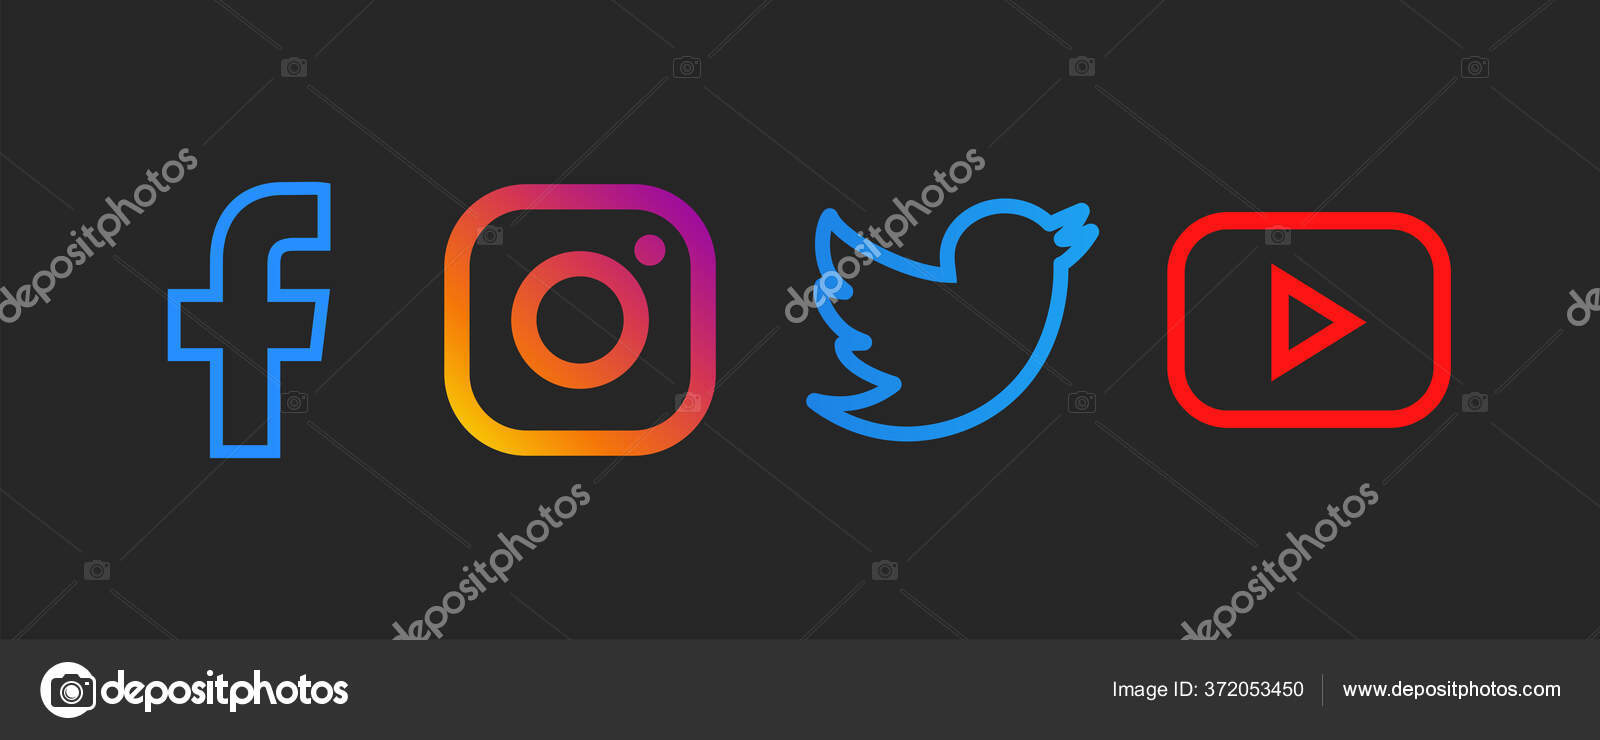 Facebook Instagram Twitter Youtube Collection Popular Social Media Logo Black Vector Image By C Leberus777 Gmail Com Vector Stock